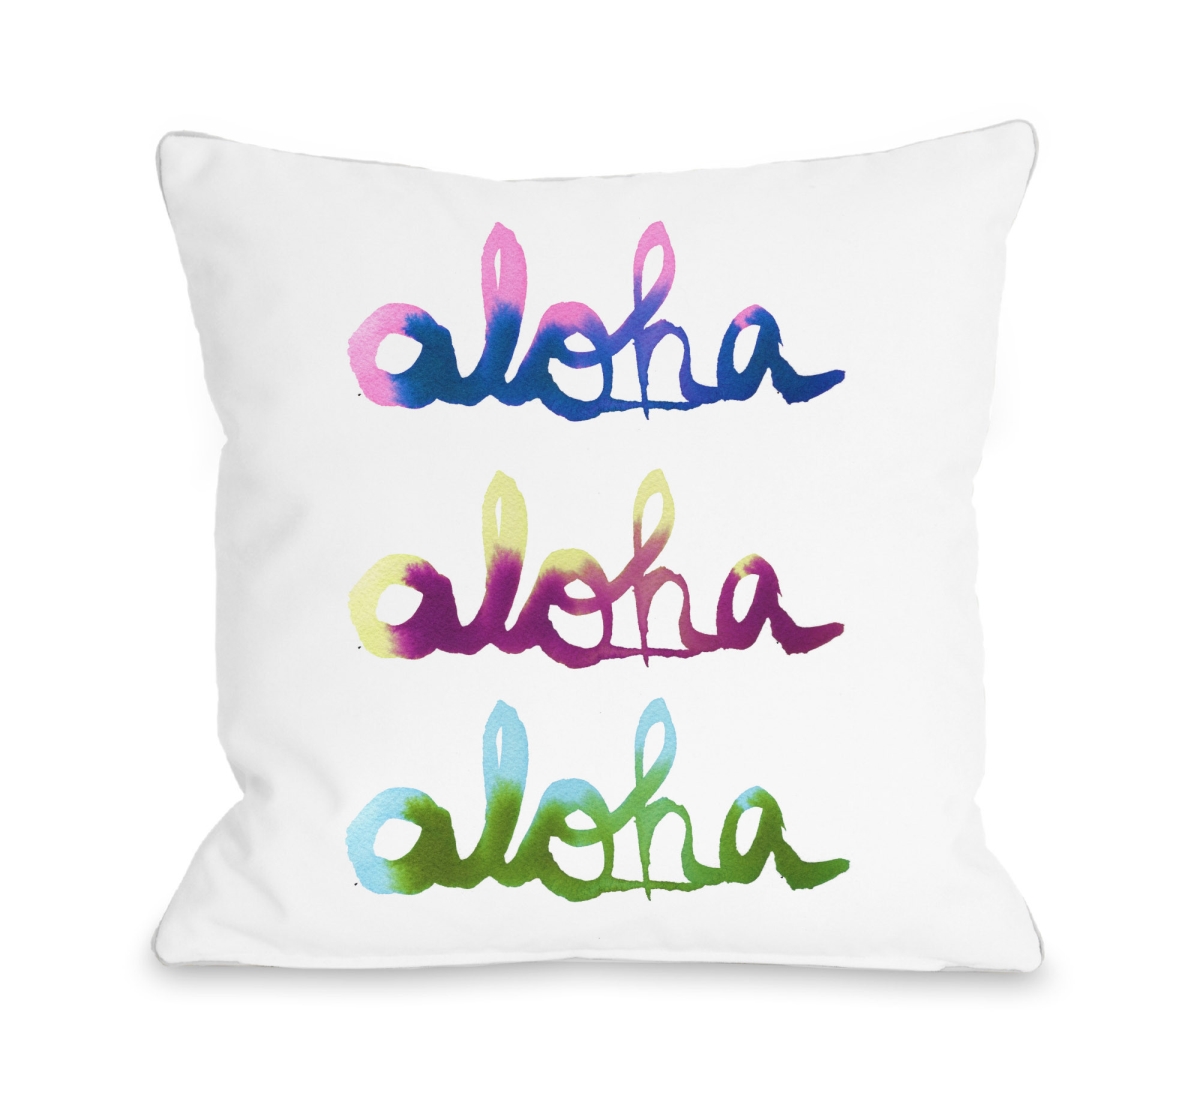 72909pl16o 16 X 16 In. Aloha Outdoor Pillow By Judit Garcia Talvera, White & Multicolor